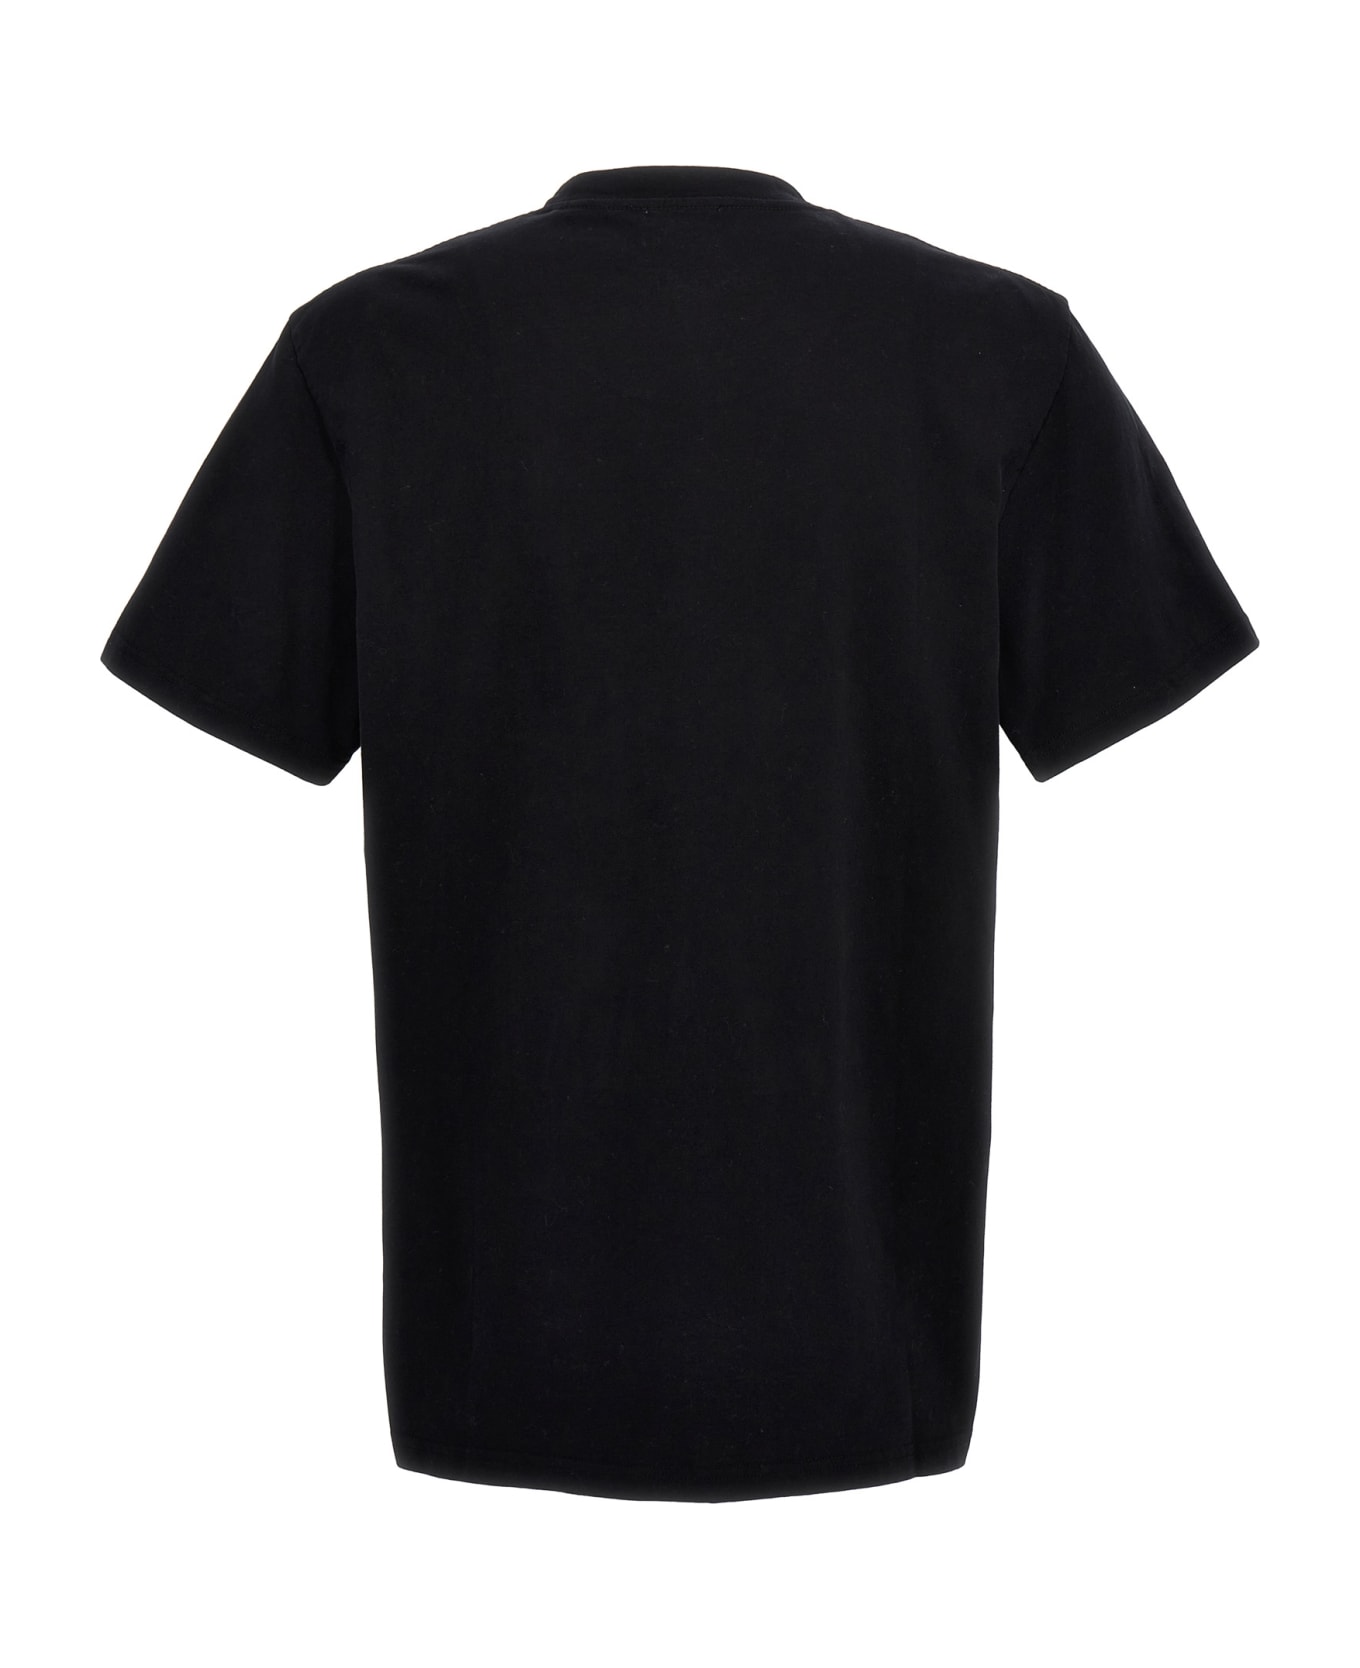 Isabel Marant 'honore' T-shirt - Black